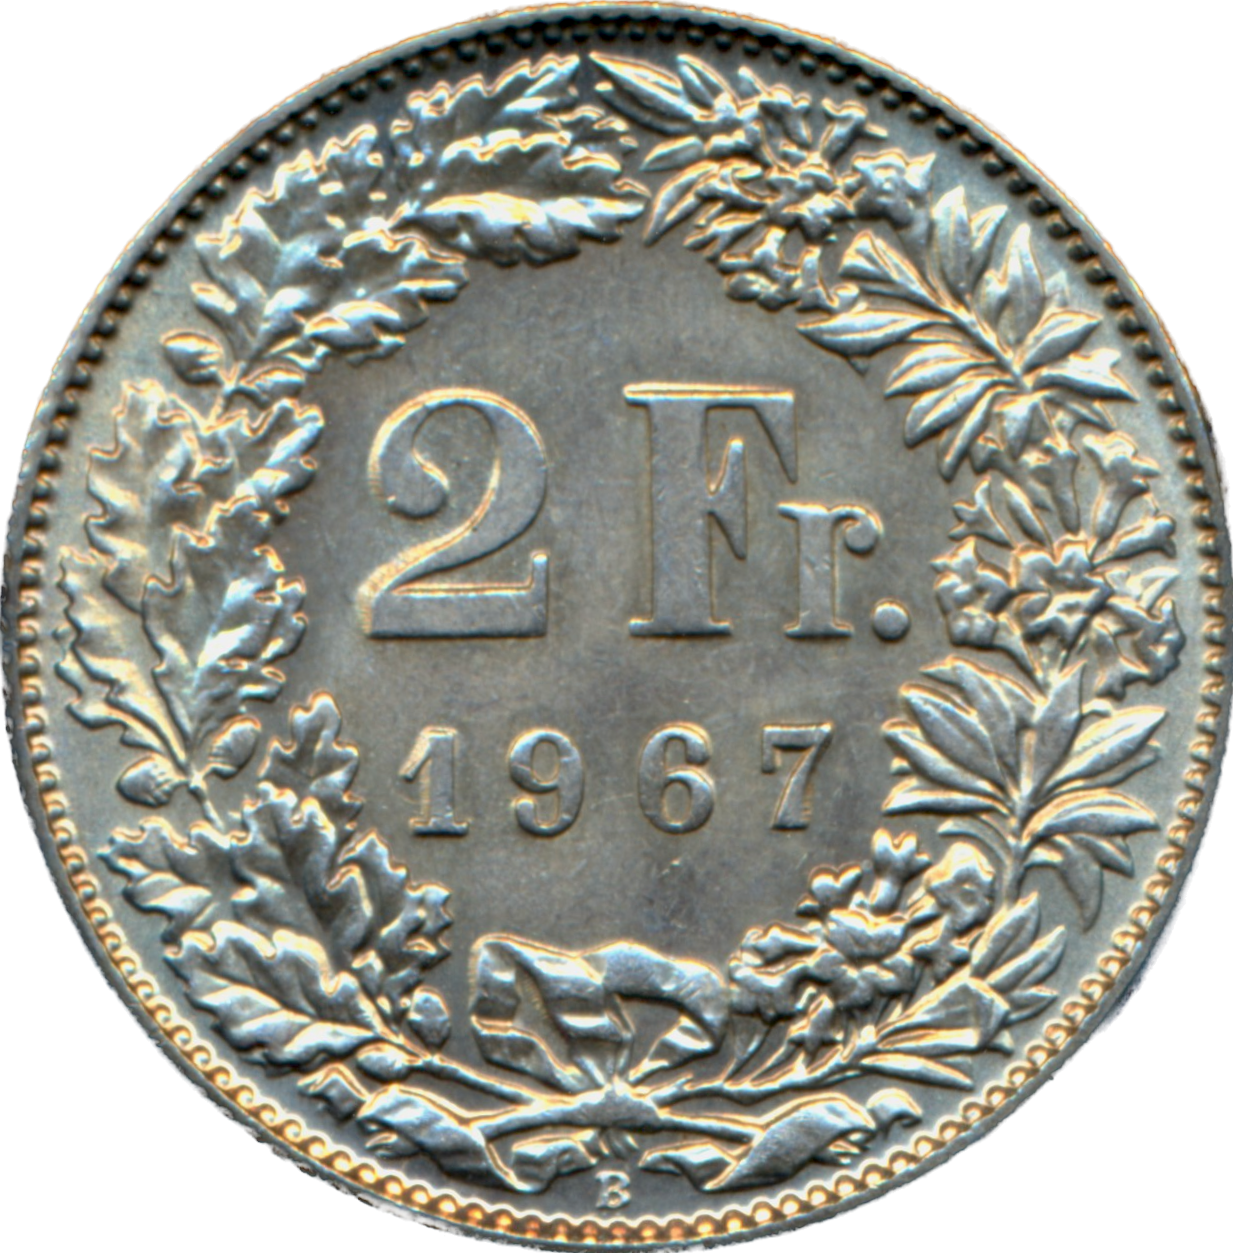 Switzerland KM21 1937 Silver 2 Francs UNC